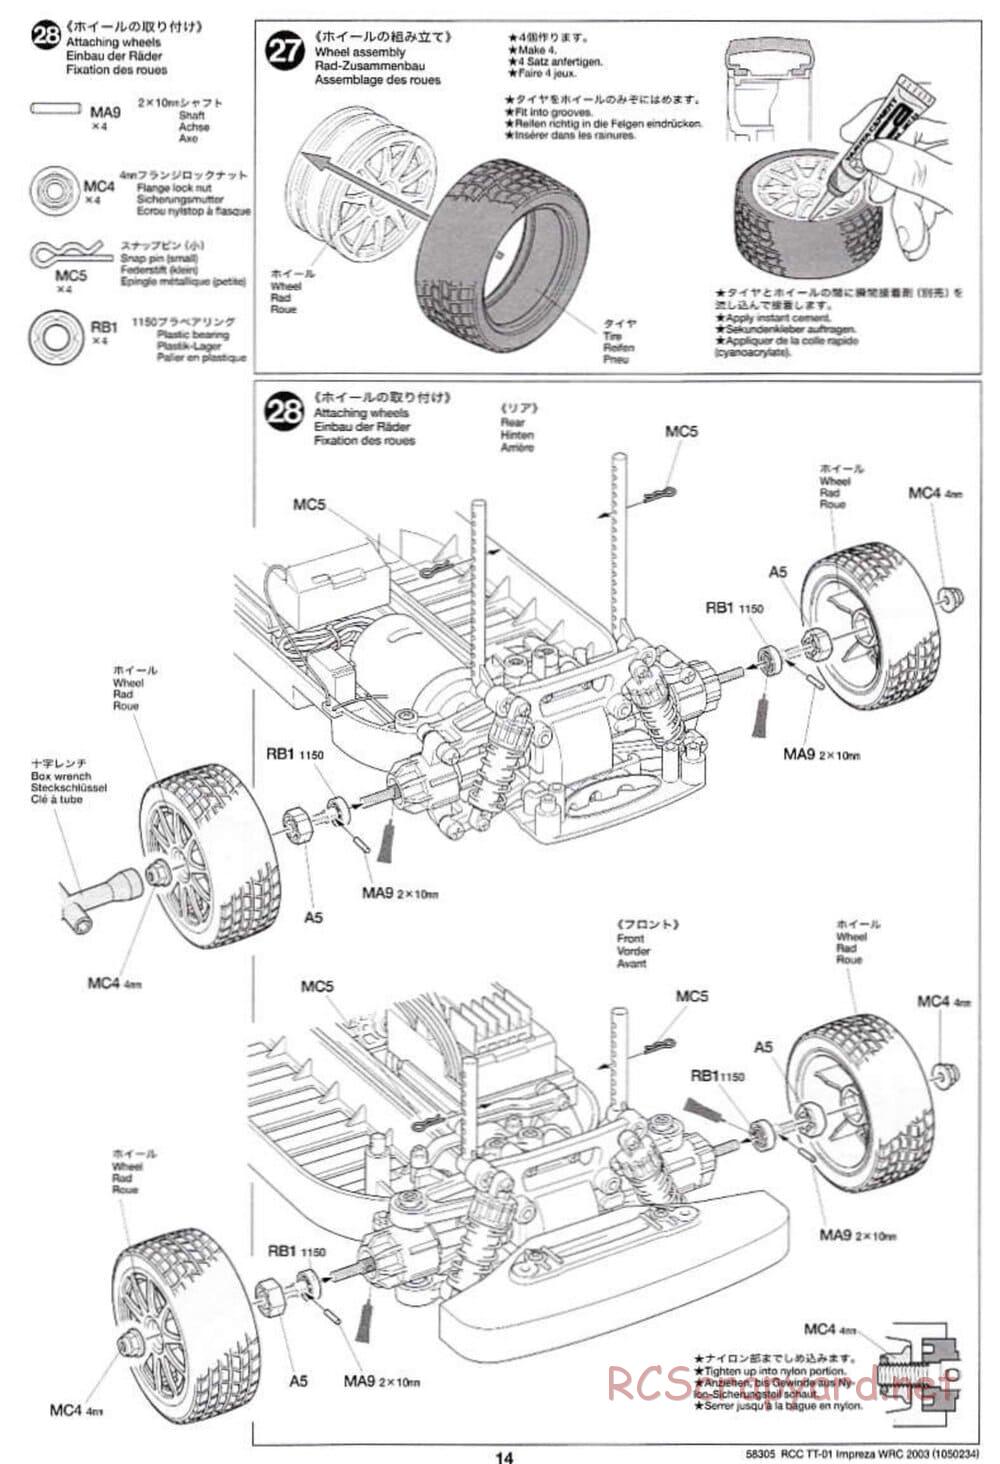 Tamiya - Subaru Impreza WRC 2003 - TT-01 Chassis - Manual - Page 14